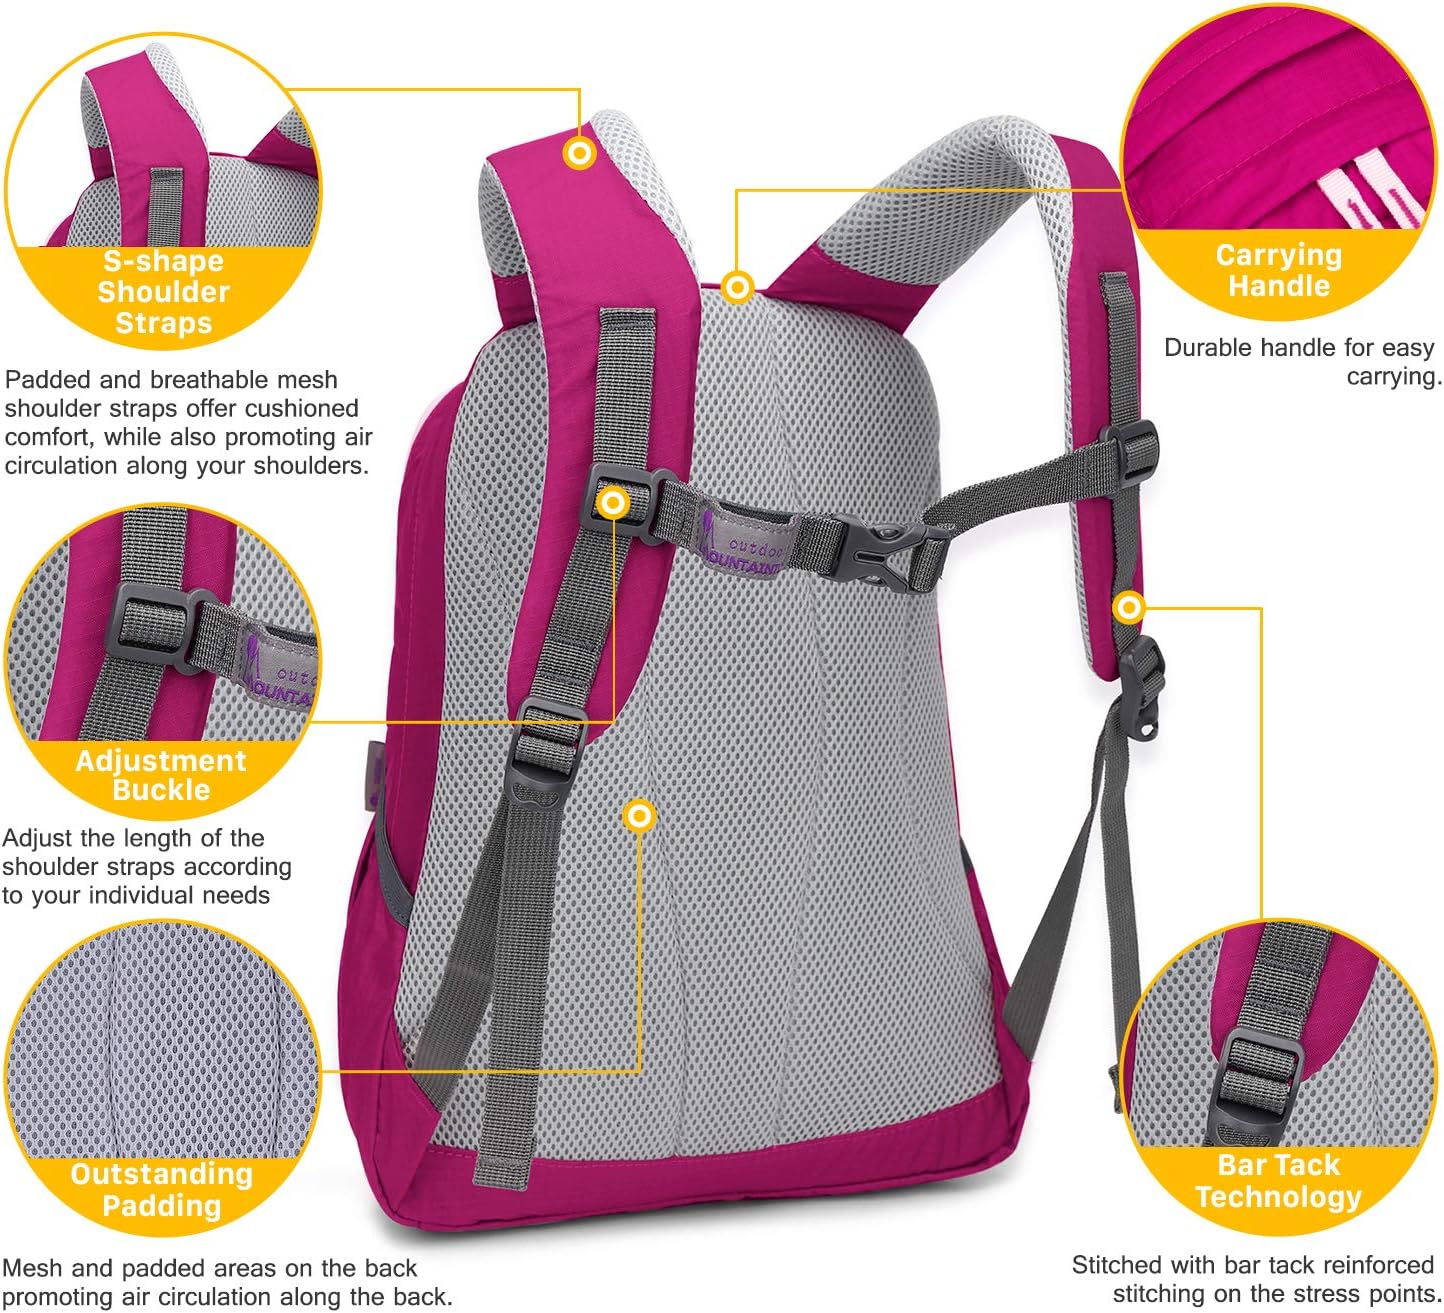 MOUNTAINTOP Kids Backpack for Boys Girls Preschool Water Resistant Lightweight Children Daypack 10L, Rose Red